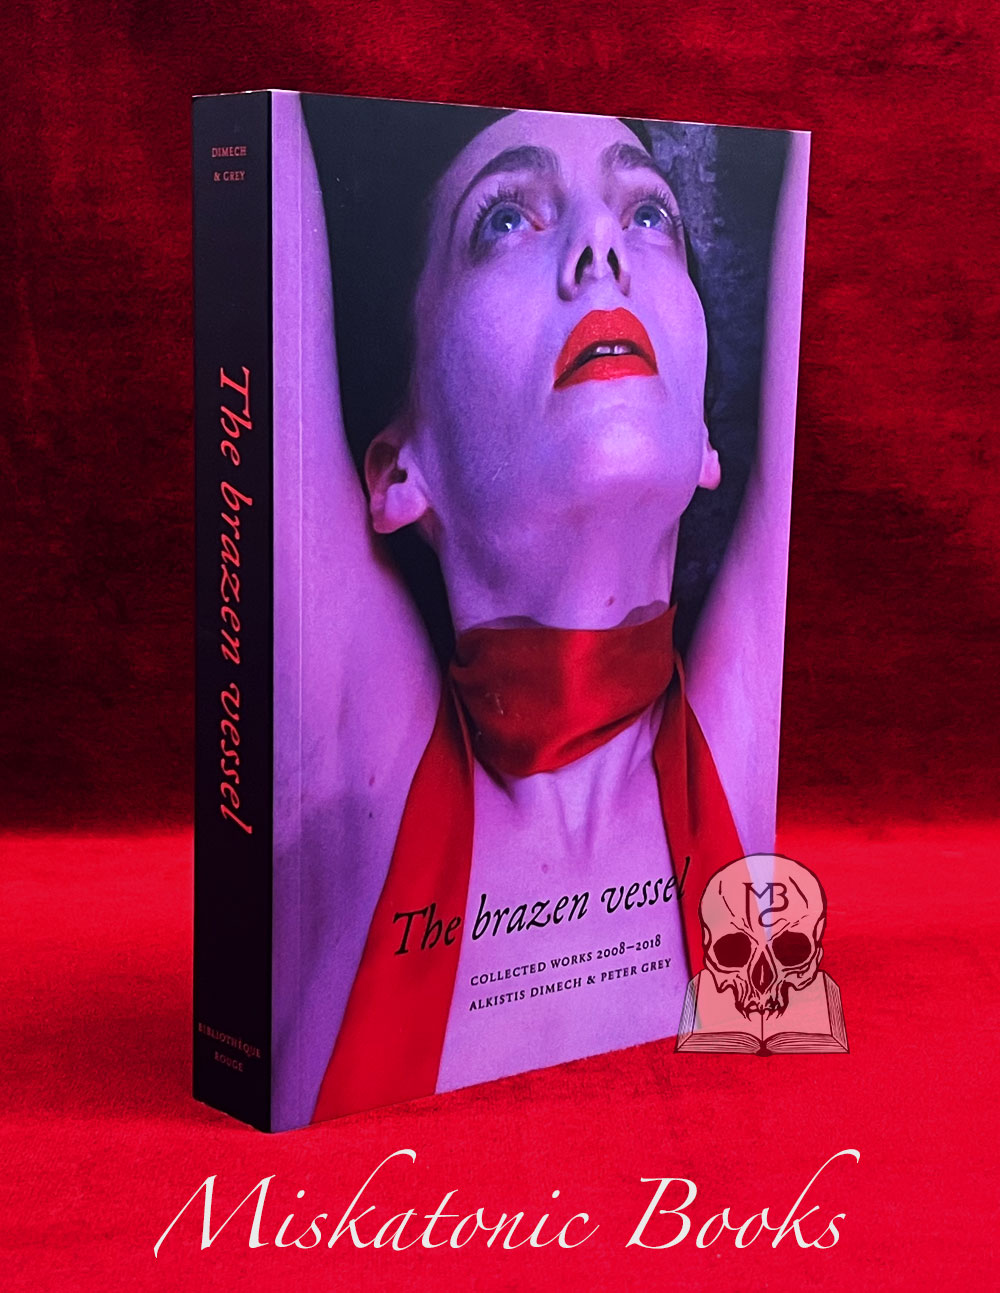 THE BRAZEN VESSEL by Alkistis Dimech & Peter Grey - Paperback Edition